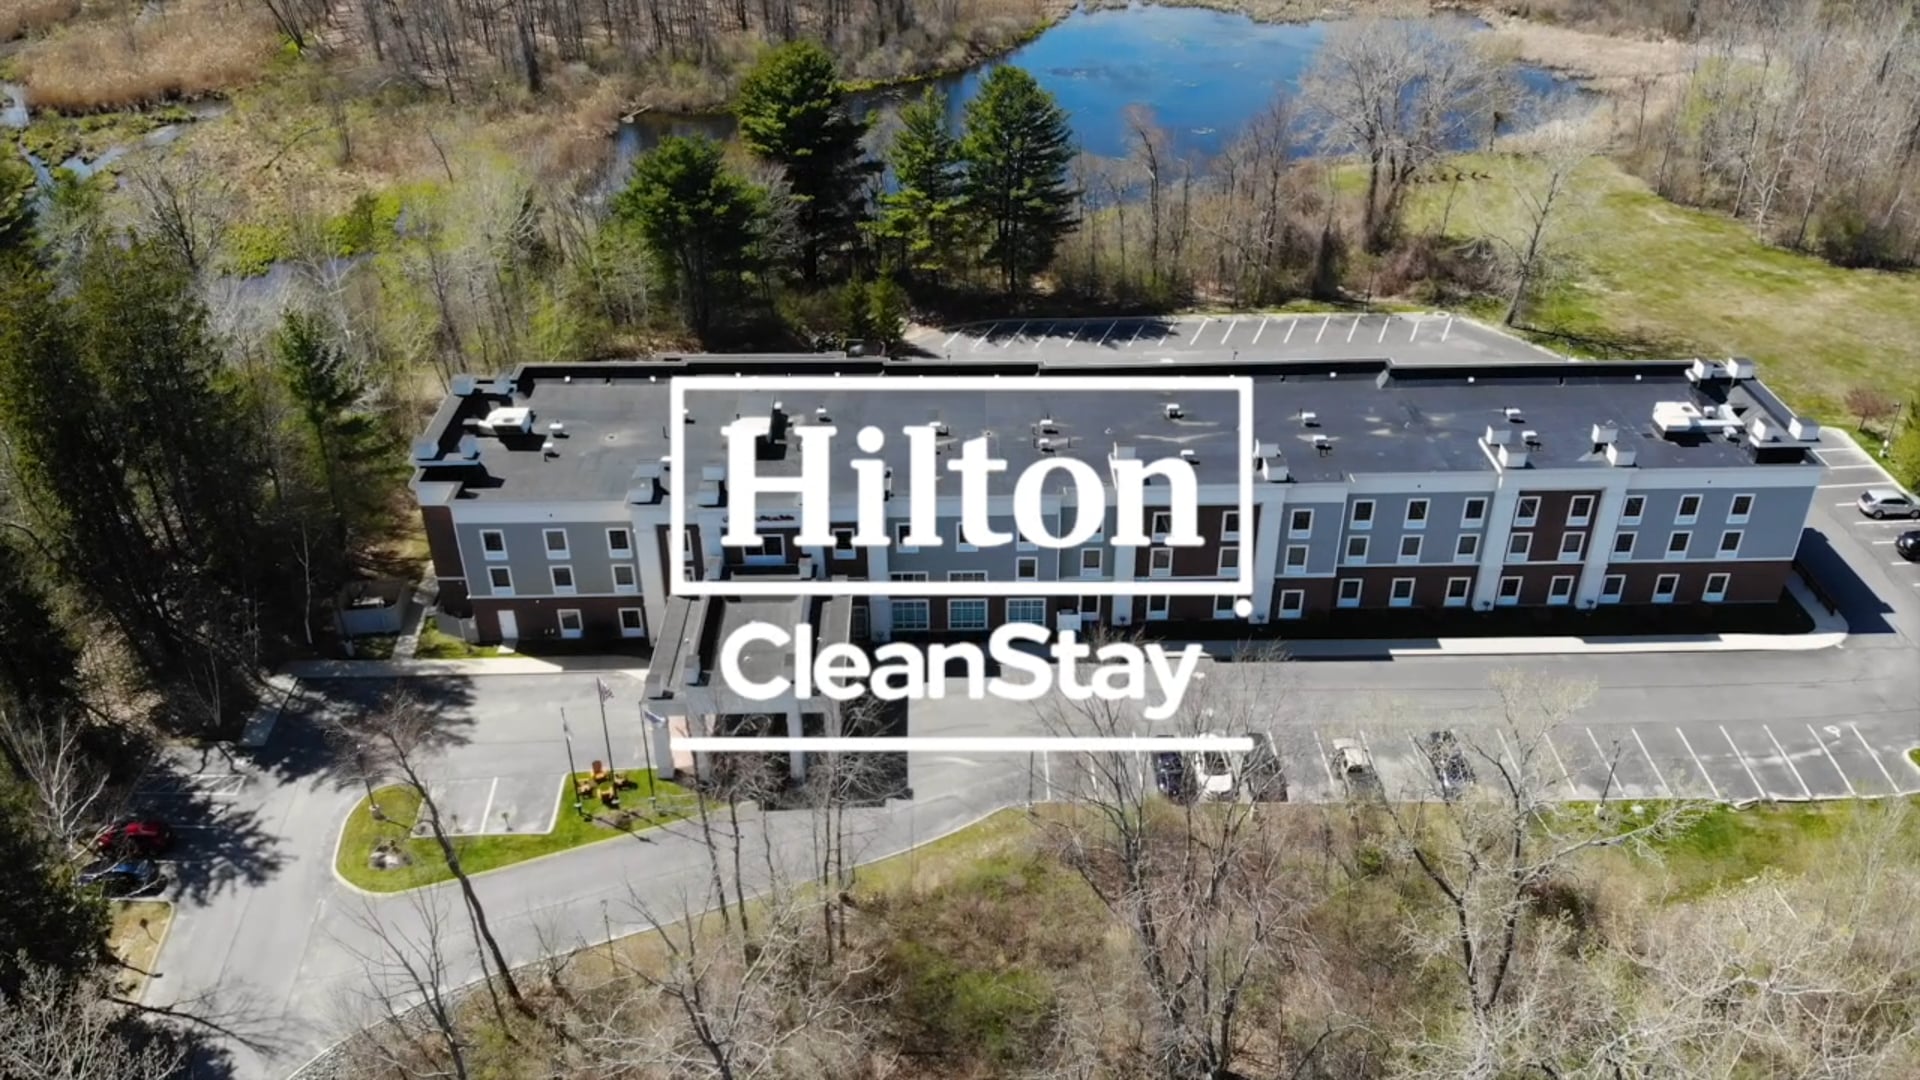 Clean Stay Program at Hampton Inn by Hilton, Lenox Berkshires